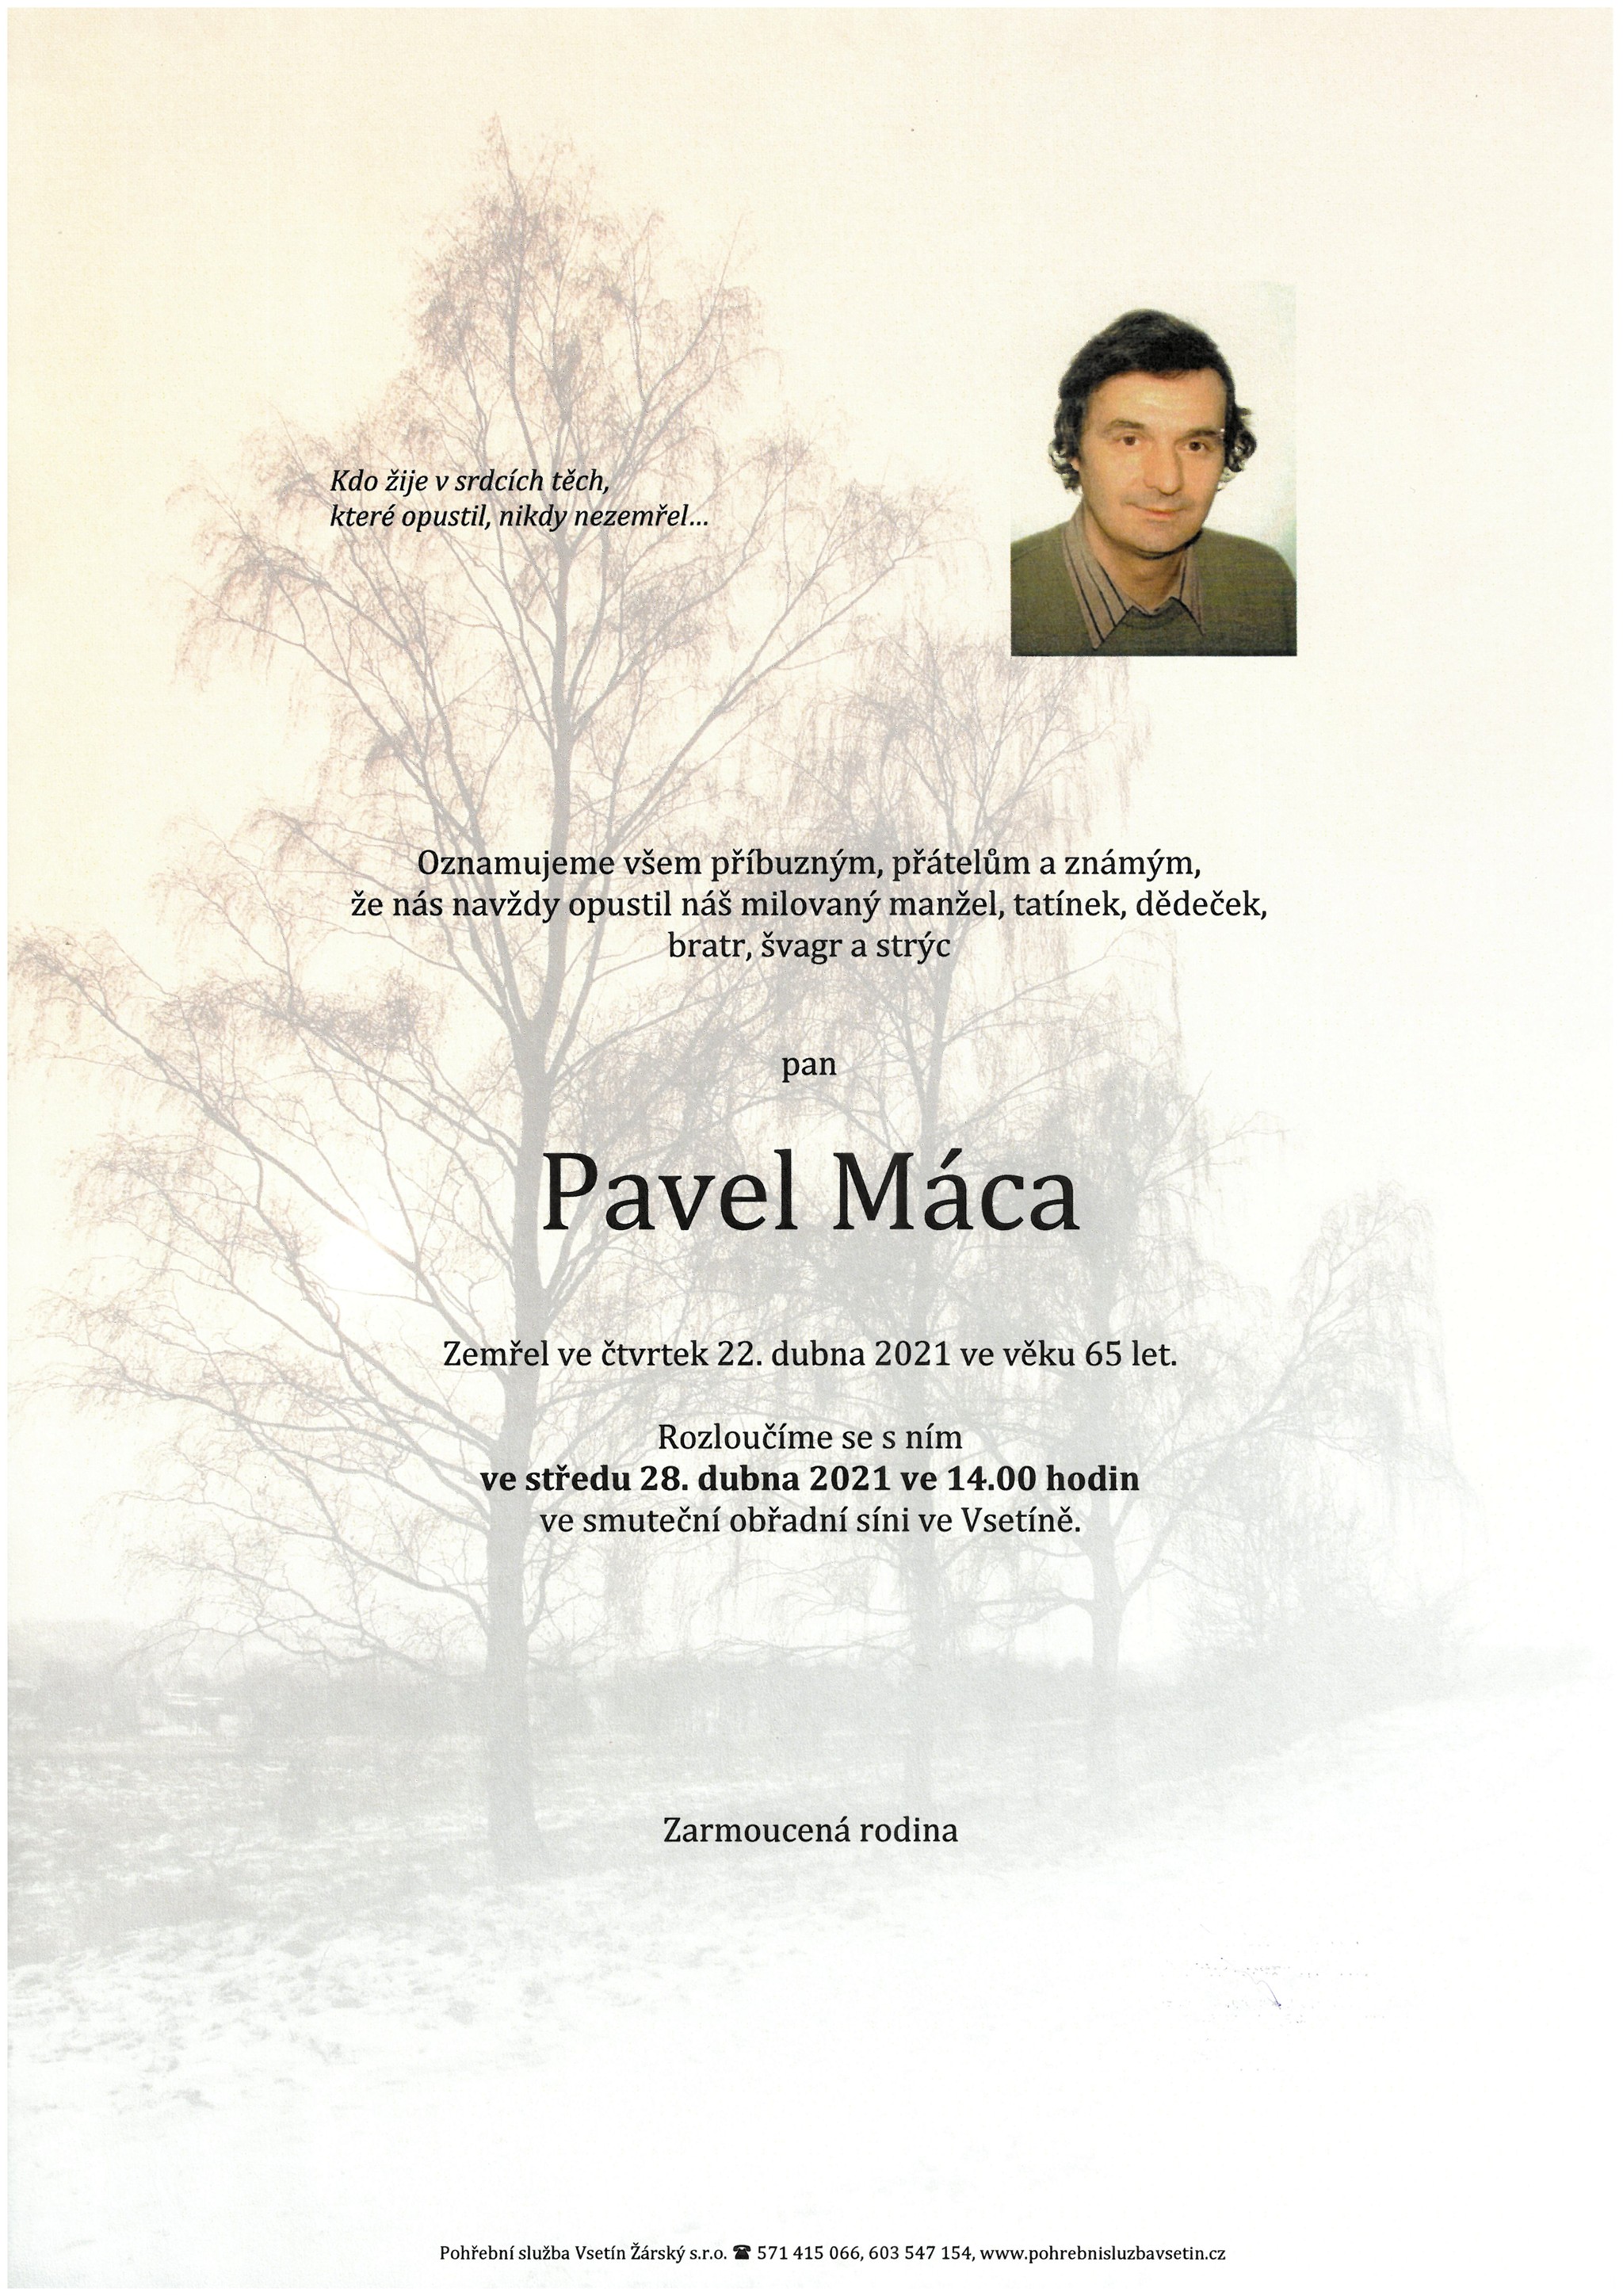 Pavel Máca